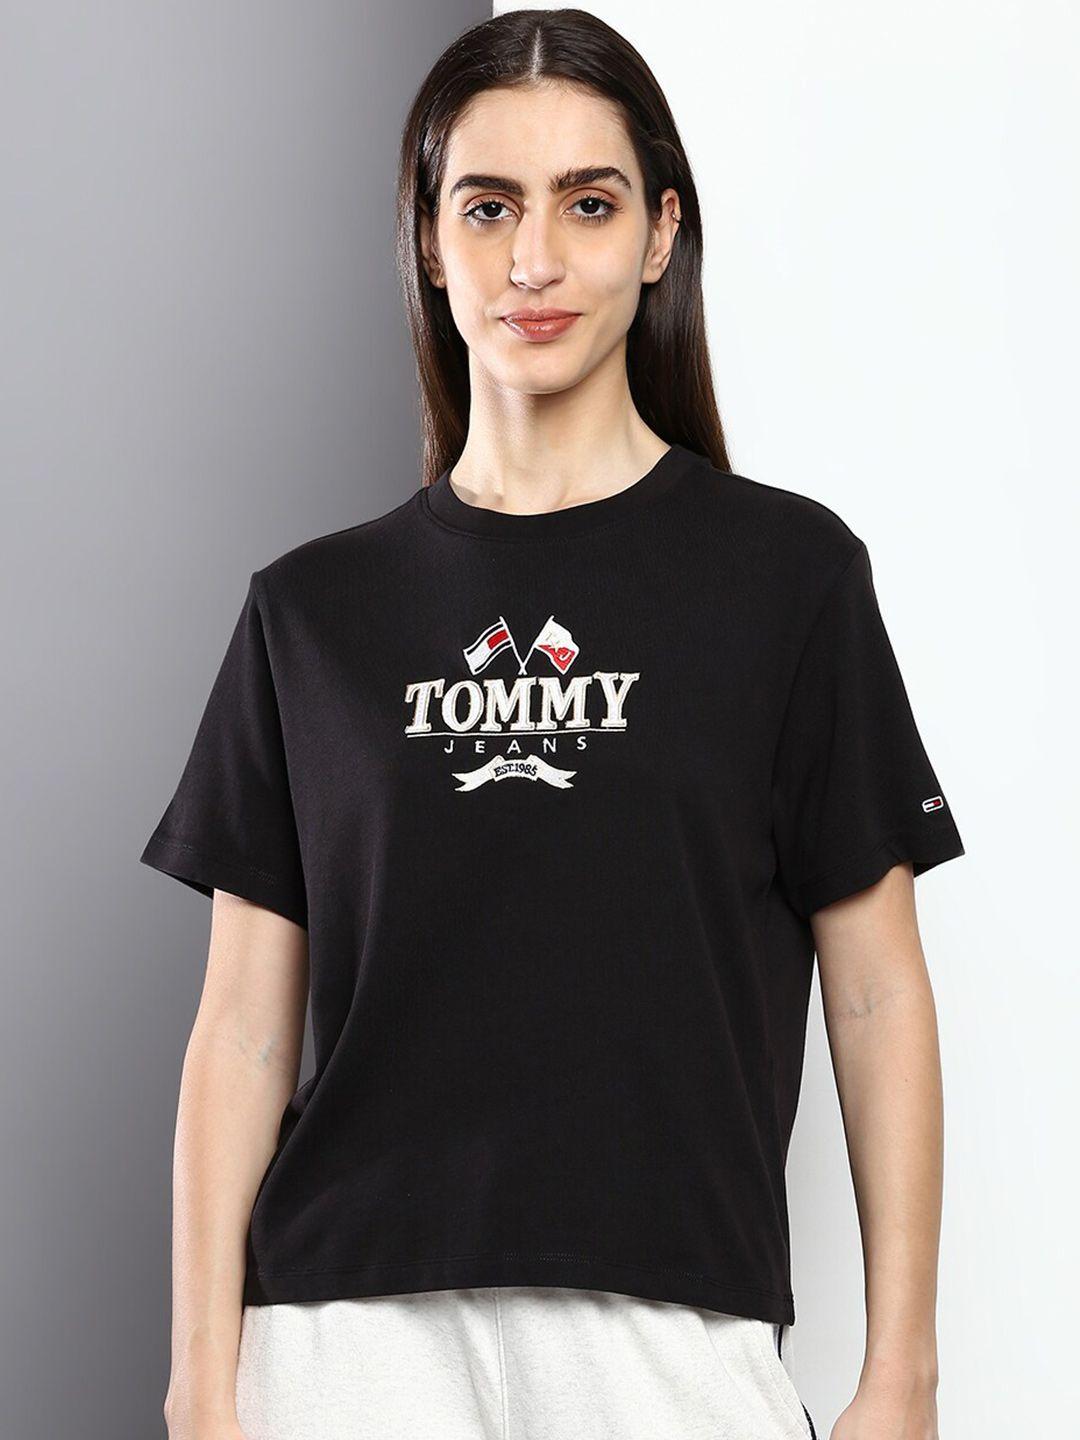 Tommy Hilfiger Women Typography Printed Cotton Round Neck T-shirt